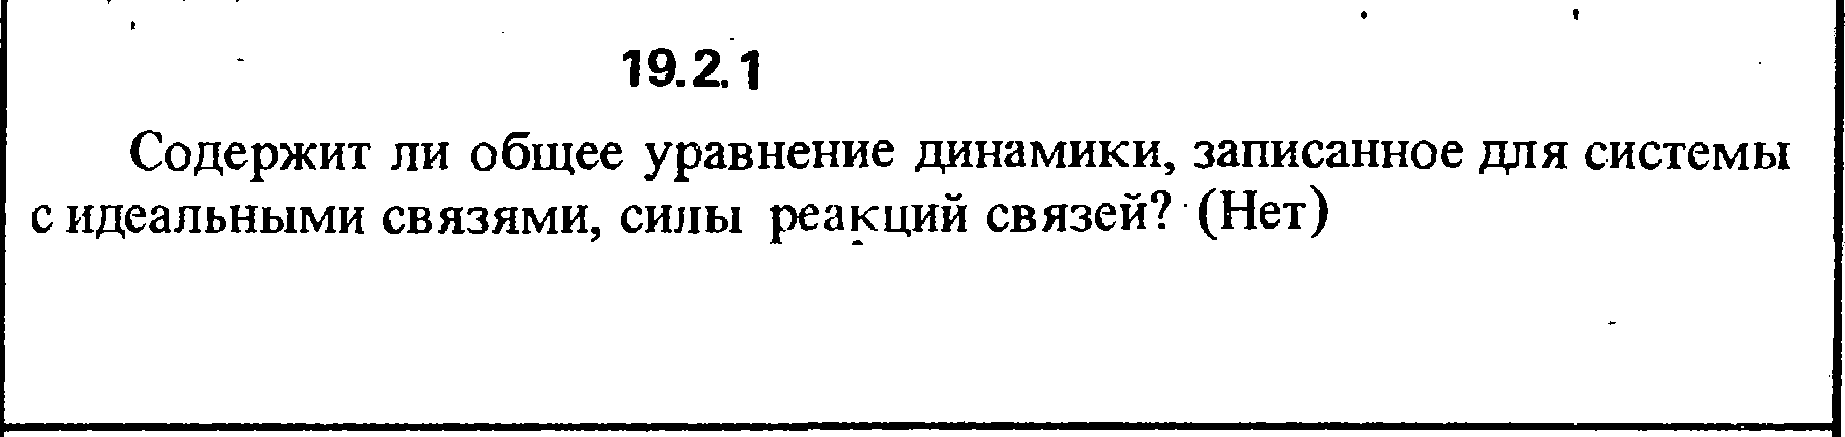 Решение 19.2.1 из сборника (решебника) Кепе О.Е. 1989